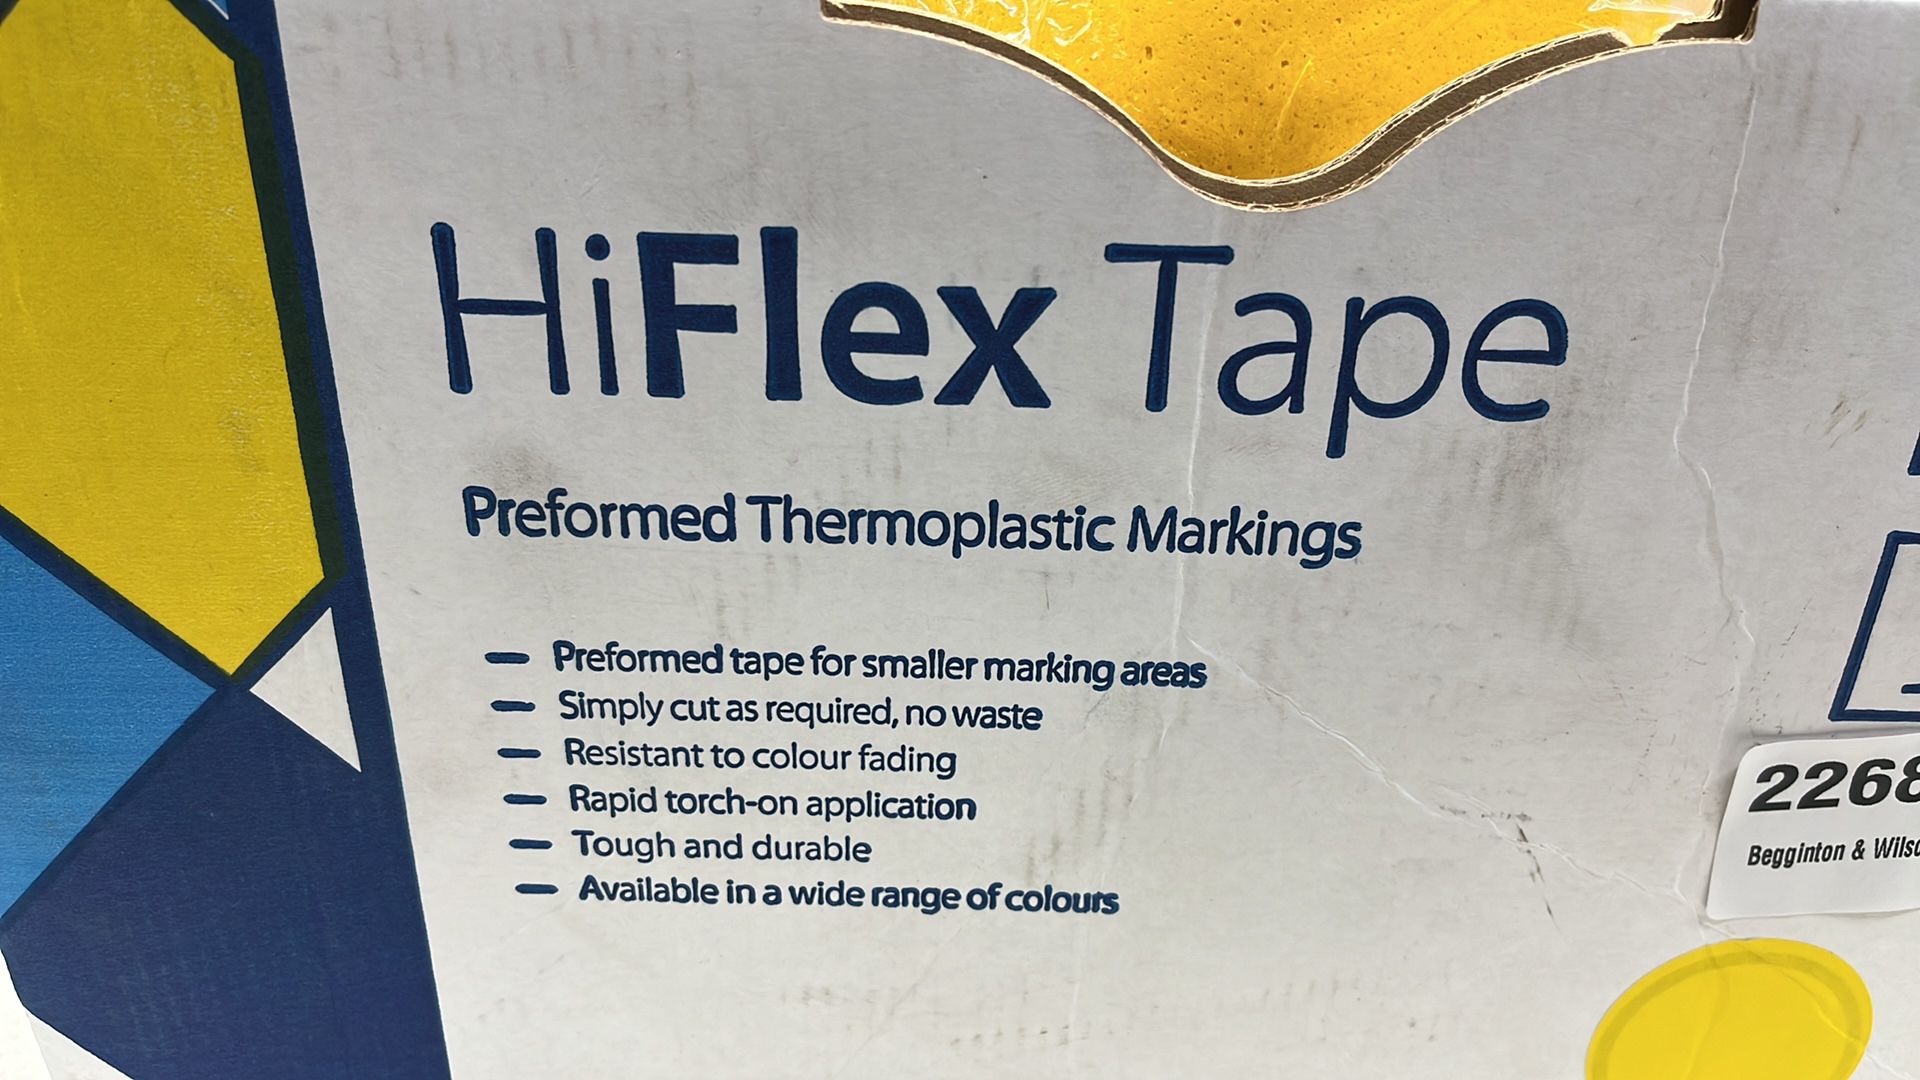 8 x Rolls Of Hiflex Tape - Image 3 of 3